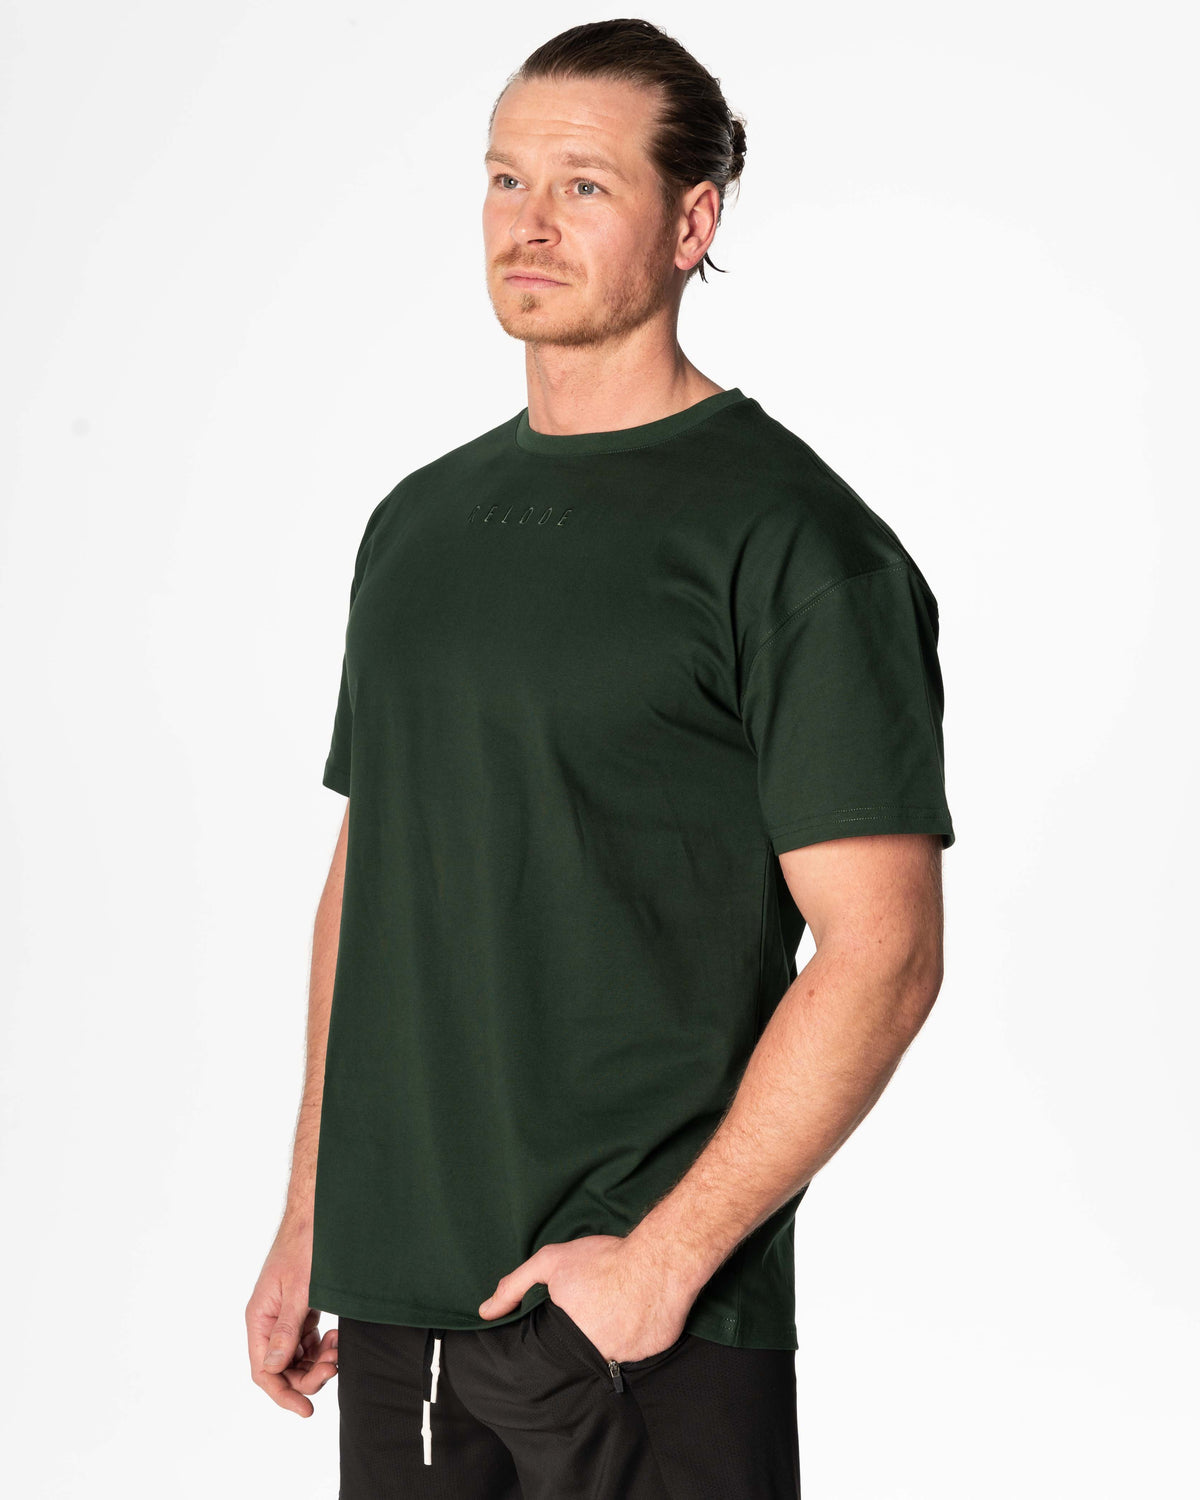 Maverick Men's T-Shirt - Green